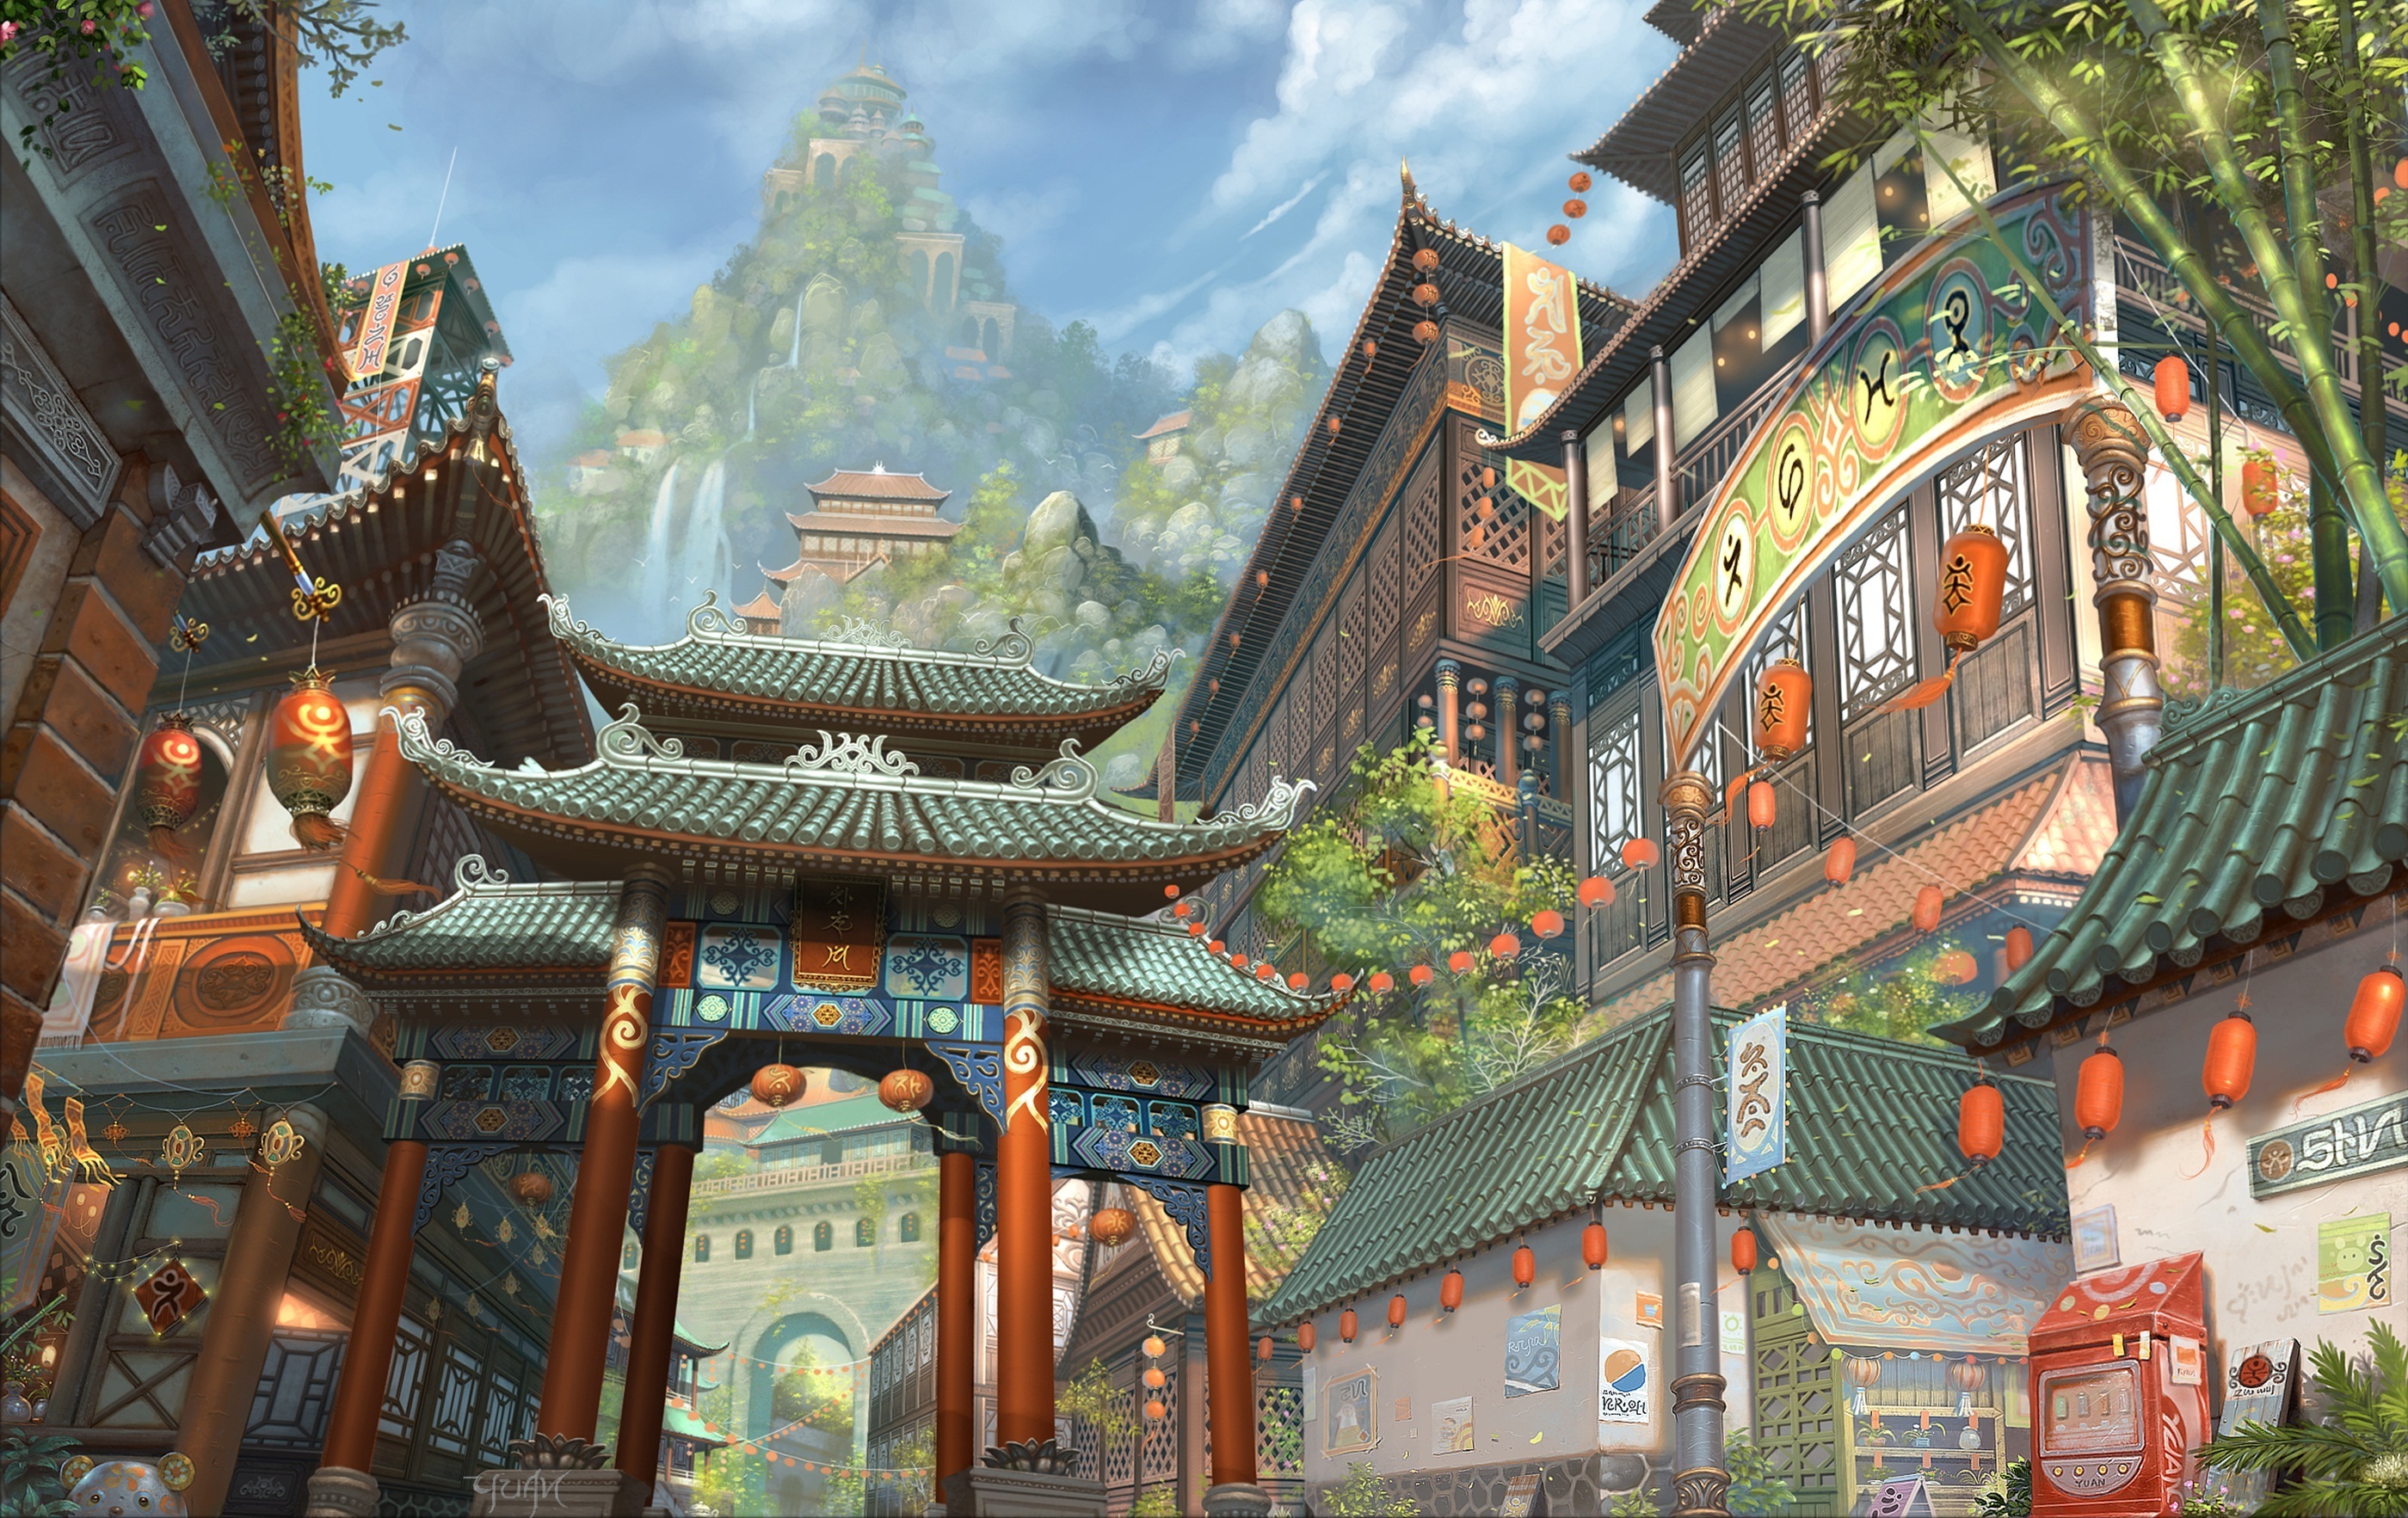 chinesische malerei tapete,chinesische architektur,die architektur,gebäude,japanische architektur,tempel